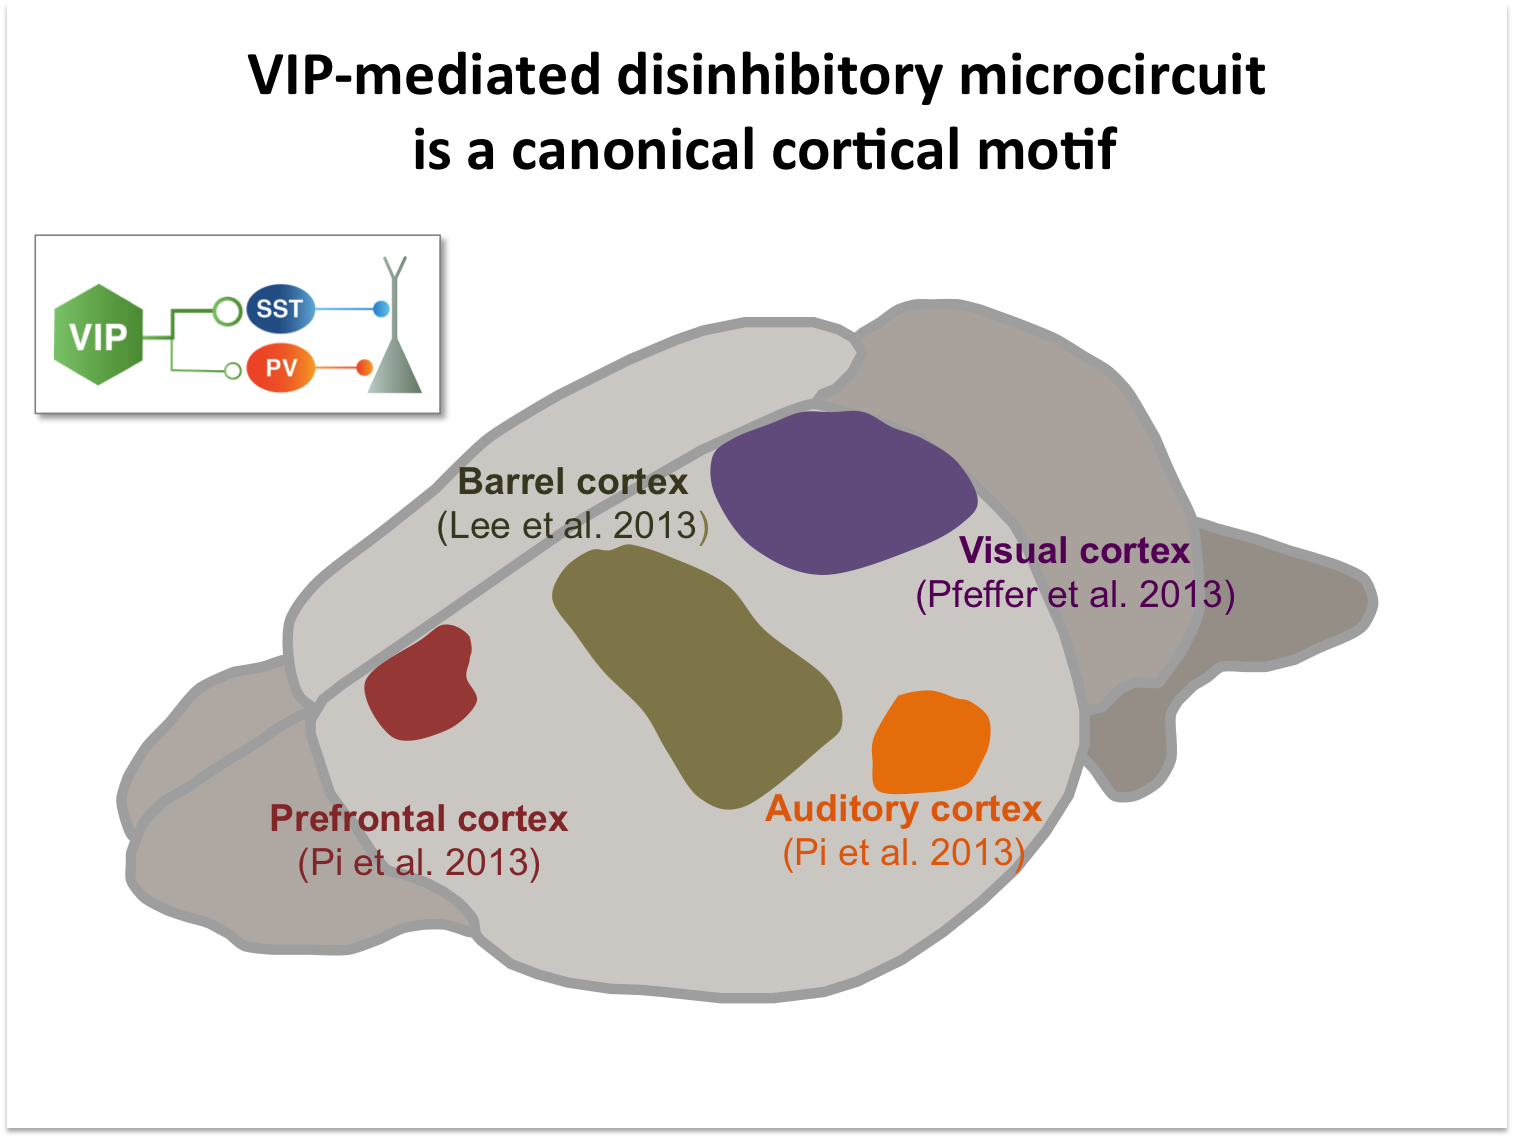 VIP-mediated disinhibitory microcircuit